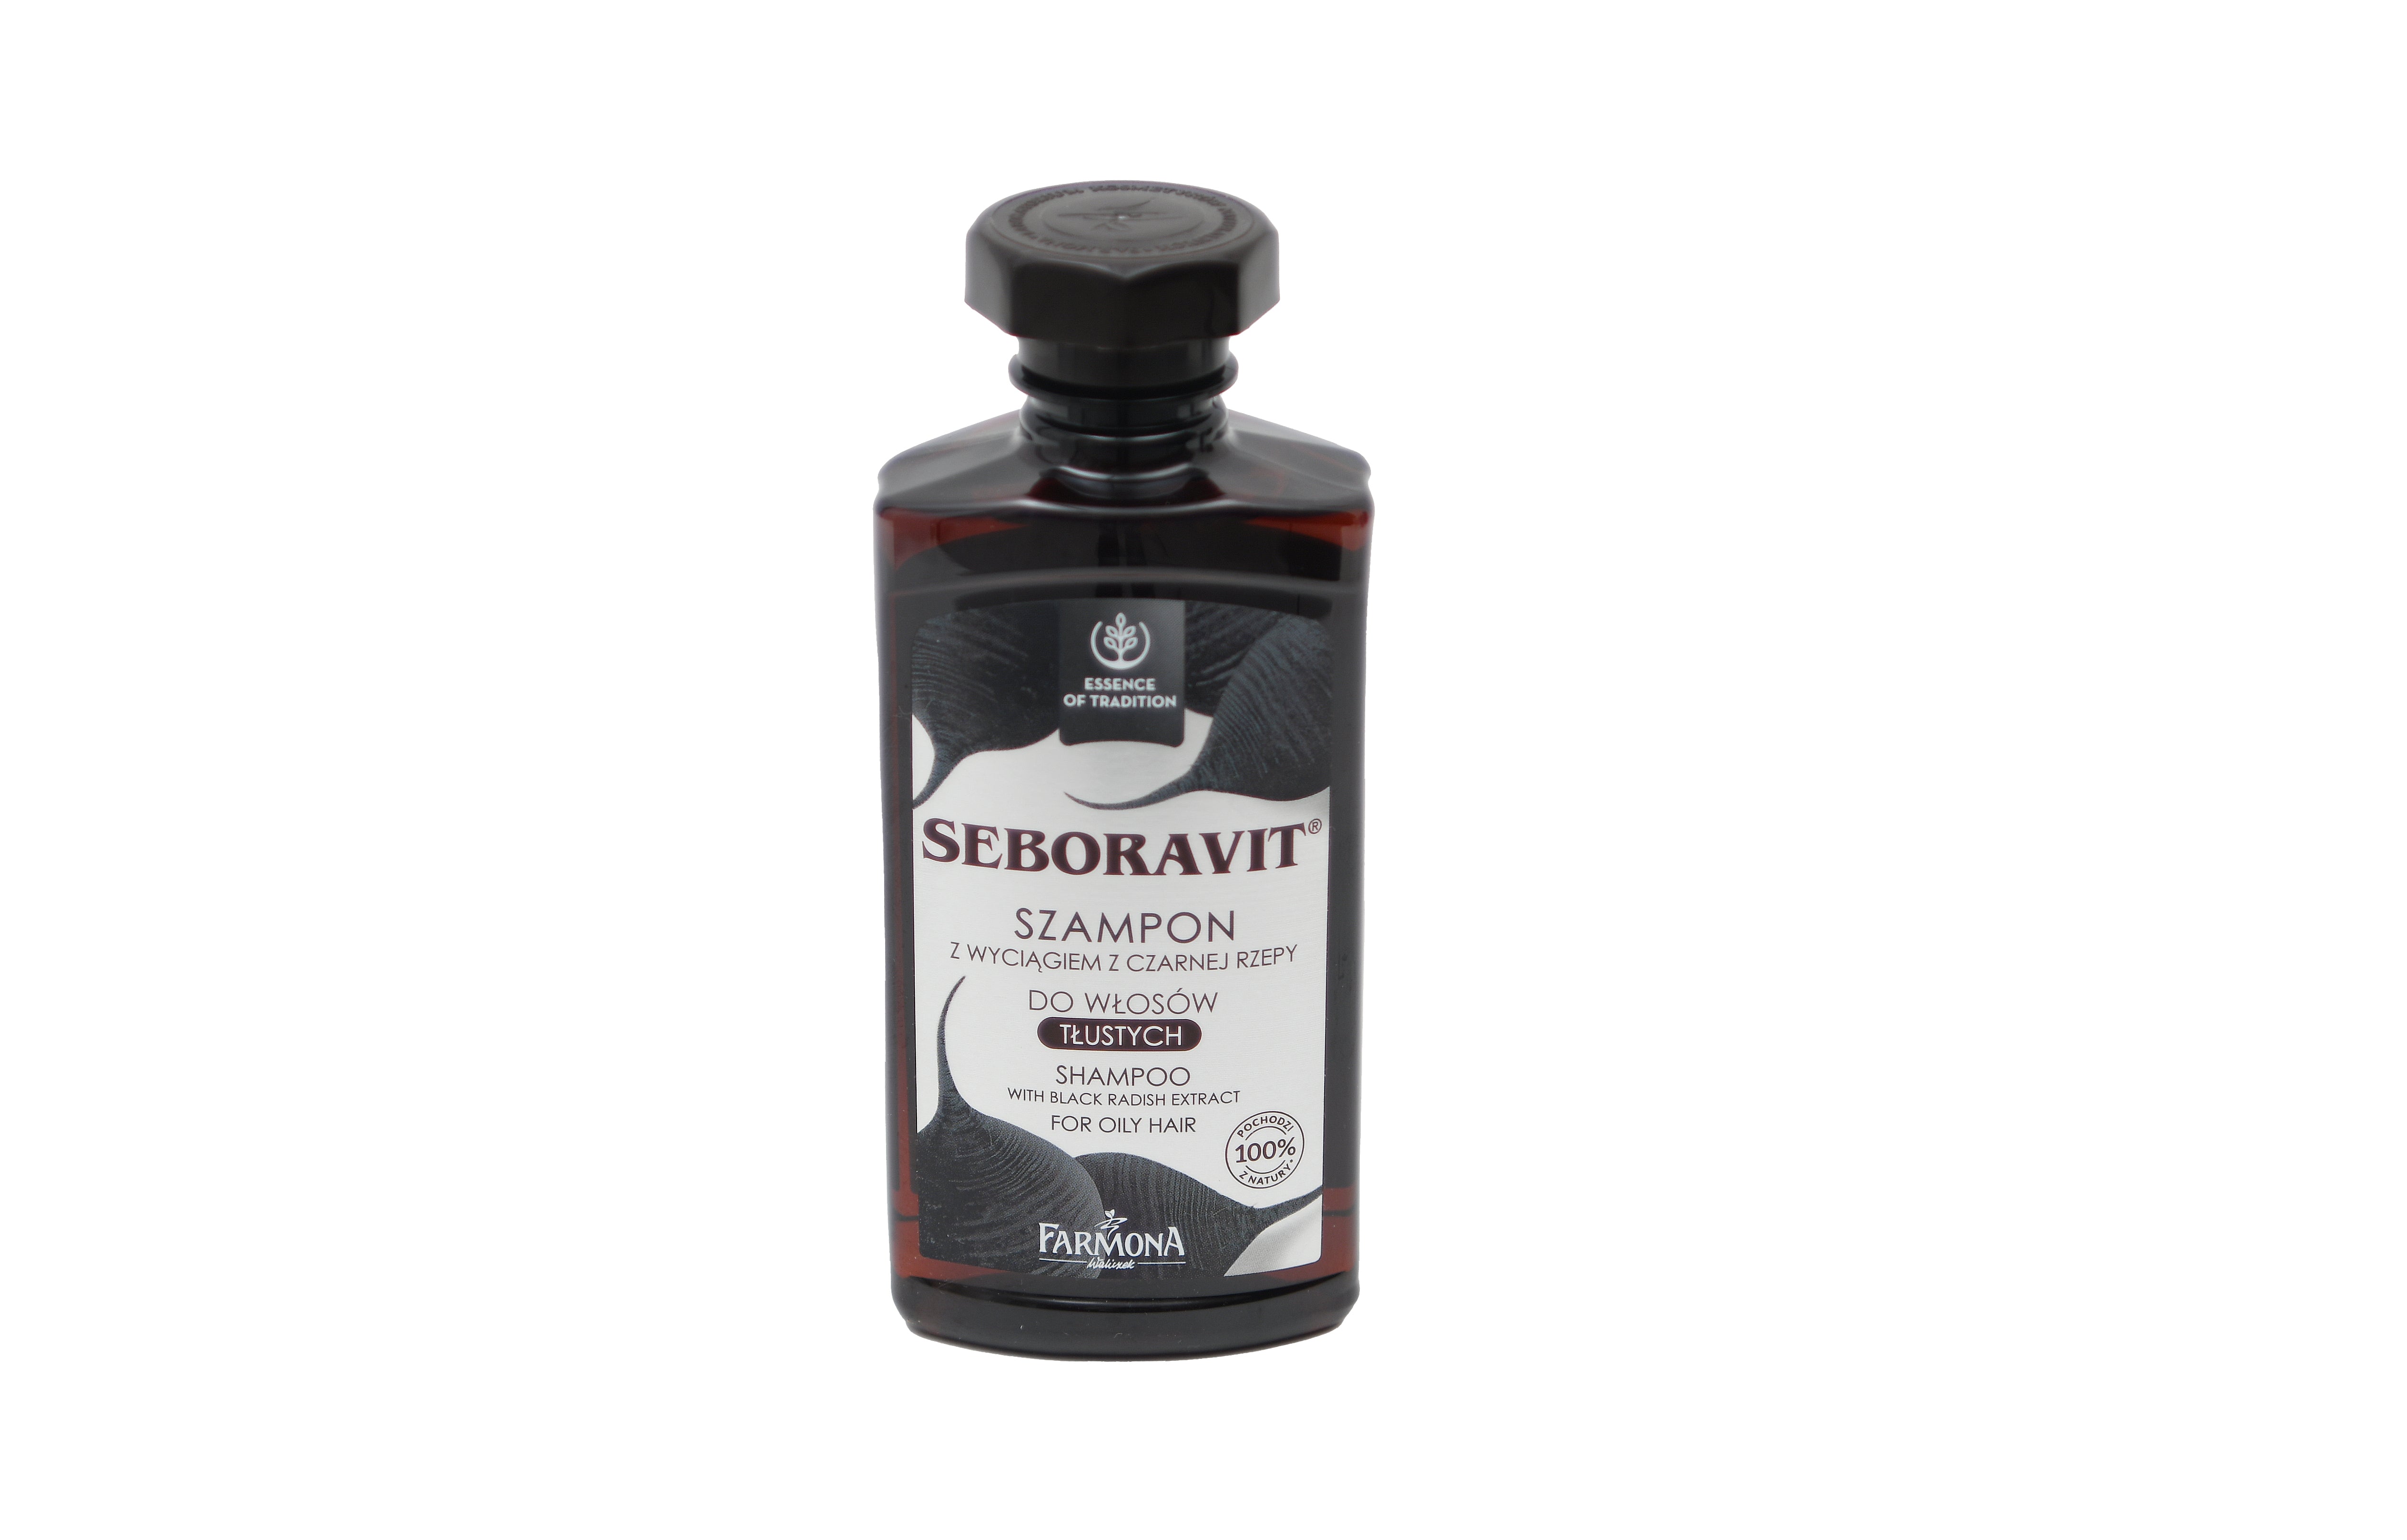 Seboravit Shampoo with Natural Black Radish Extract 330ml